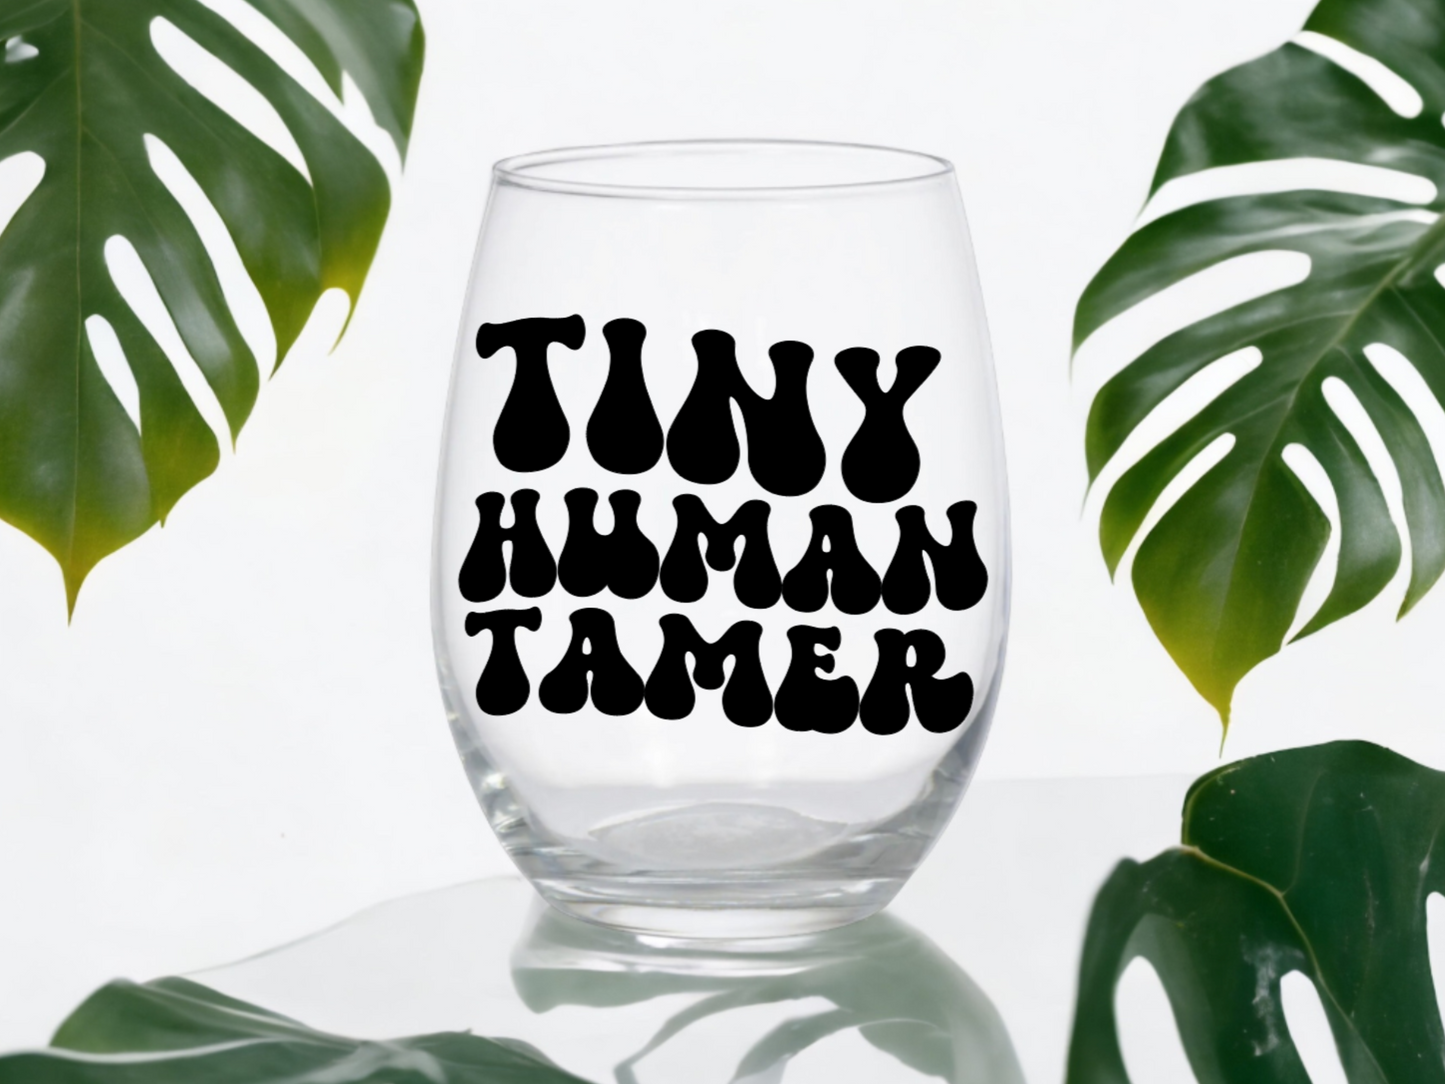 Tiny Human Tamer Wine Glass